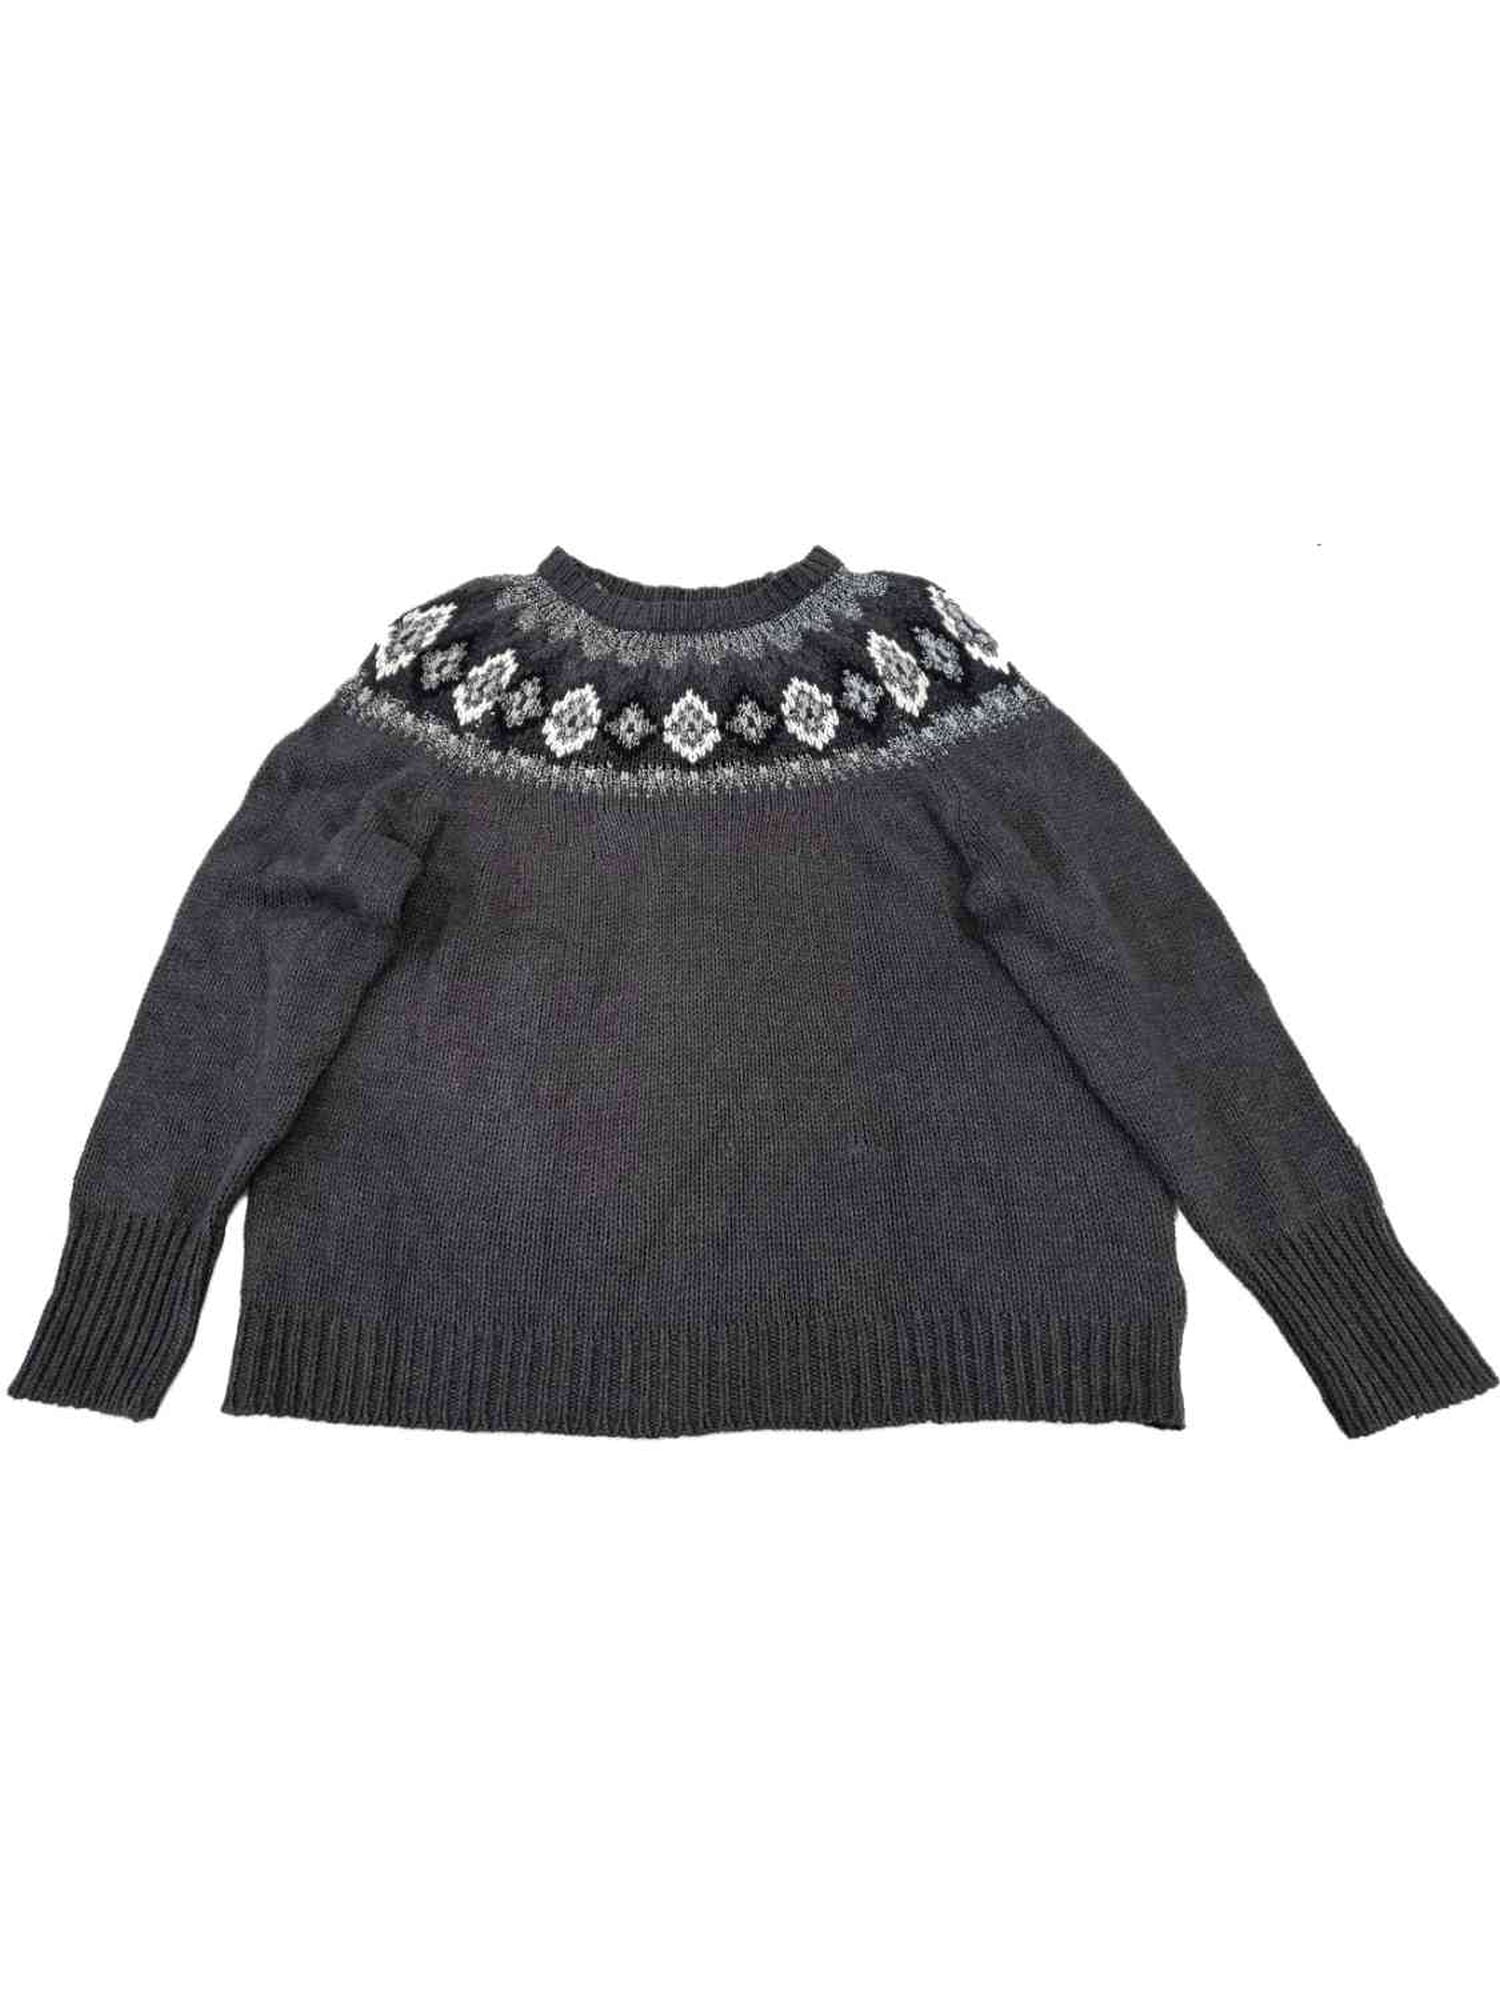 Chaps - Womens Dark Grey Metallic Sparkle Long Sleeve Warm Knit Winter ...